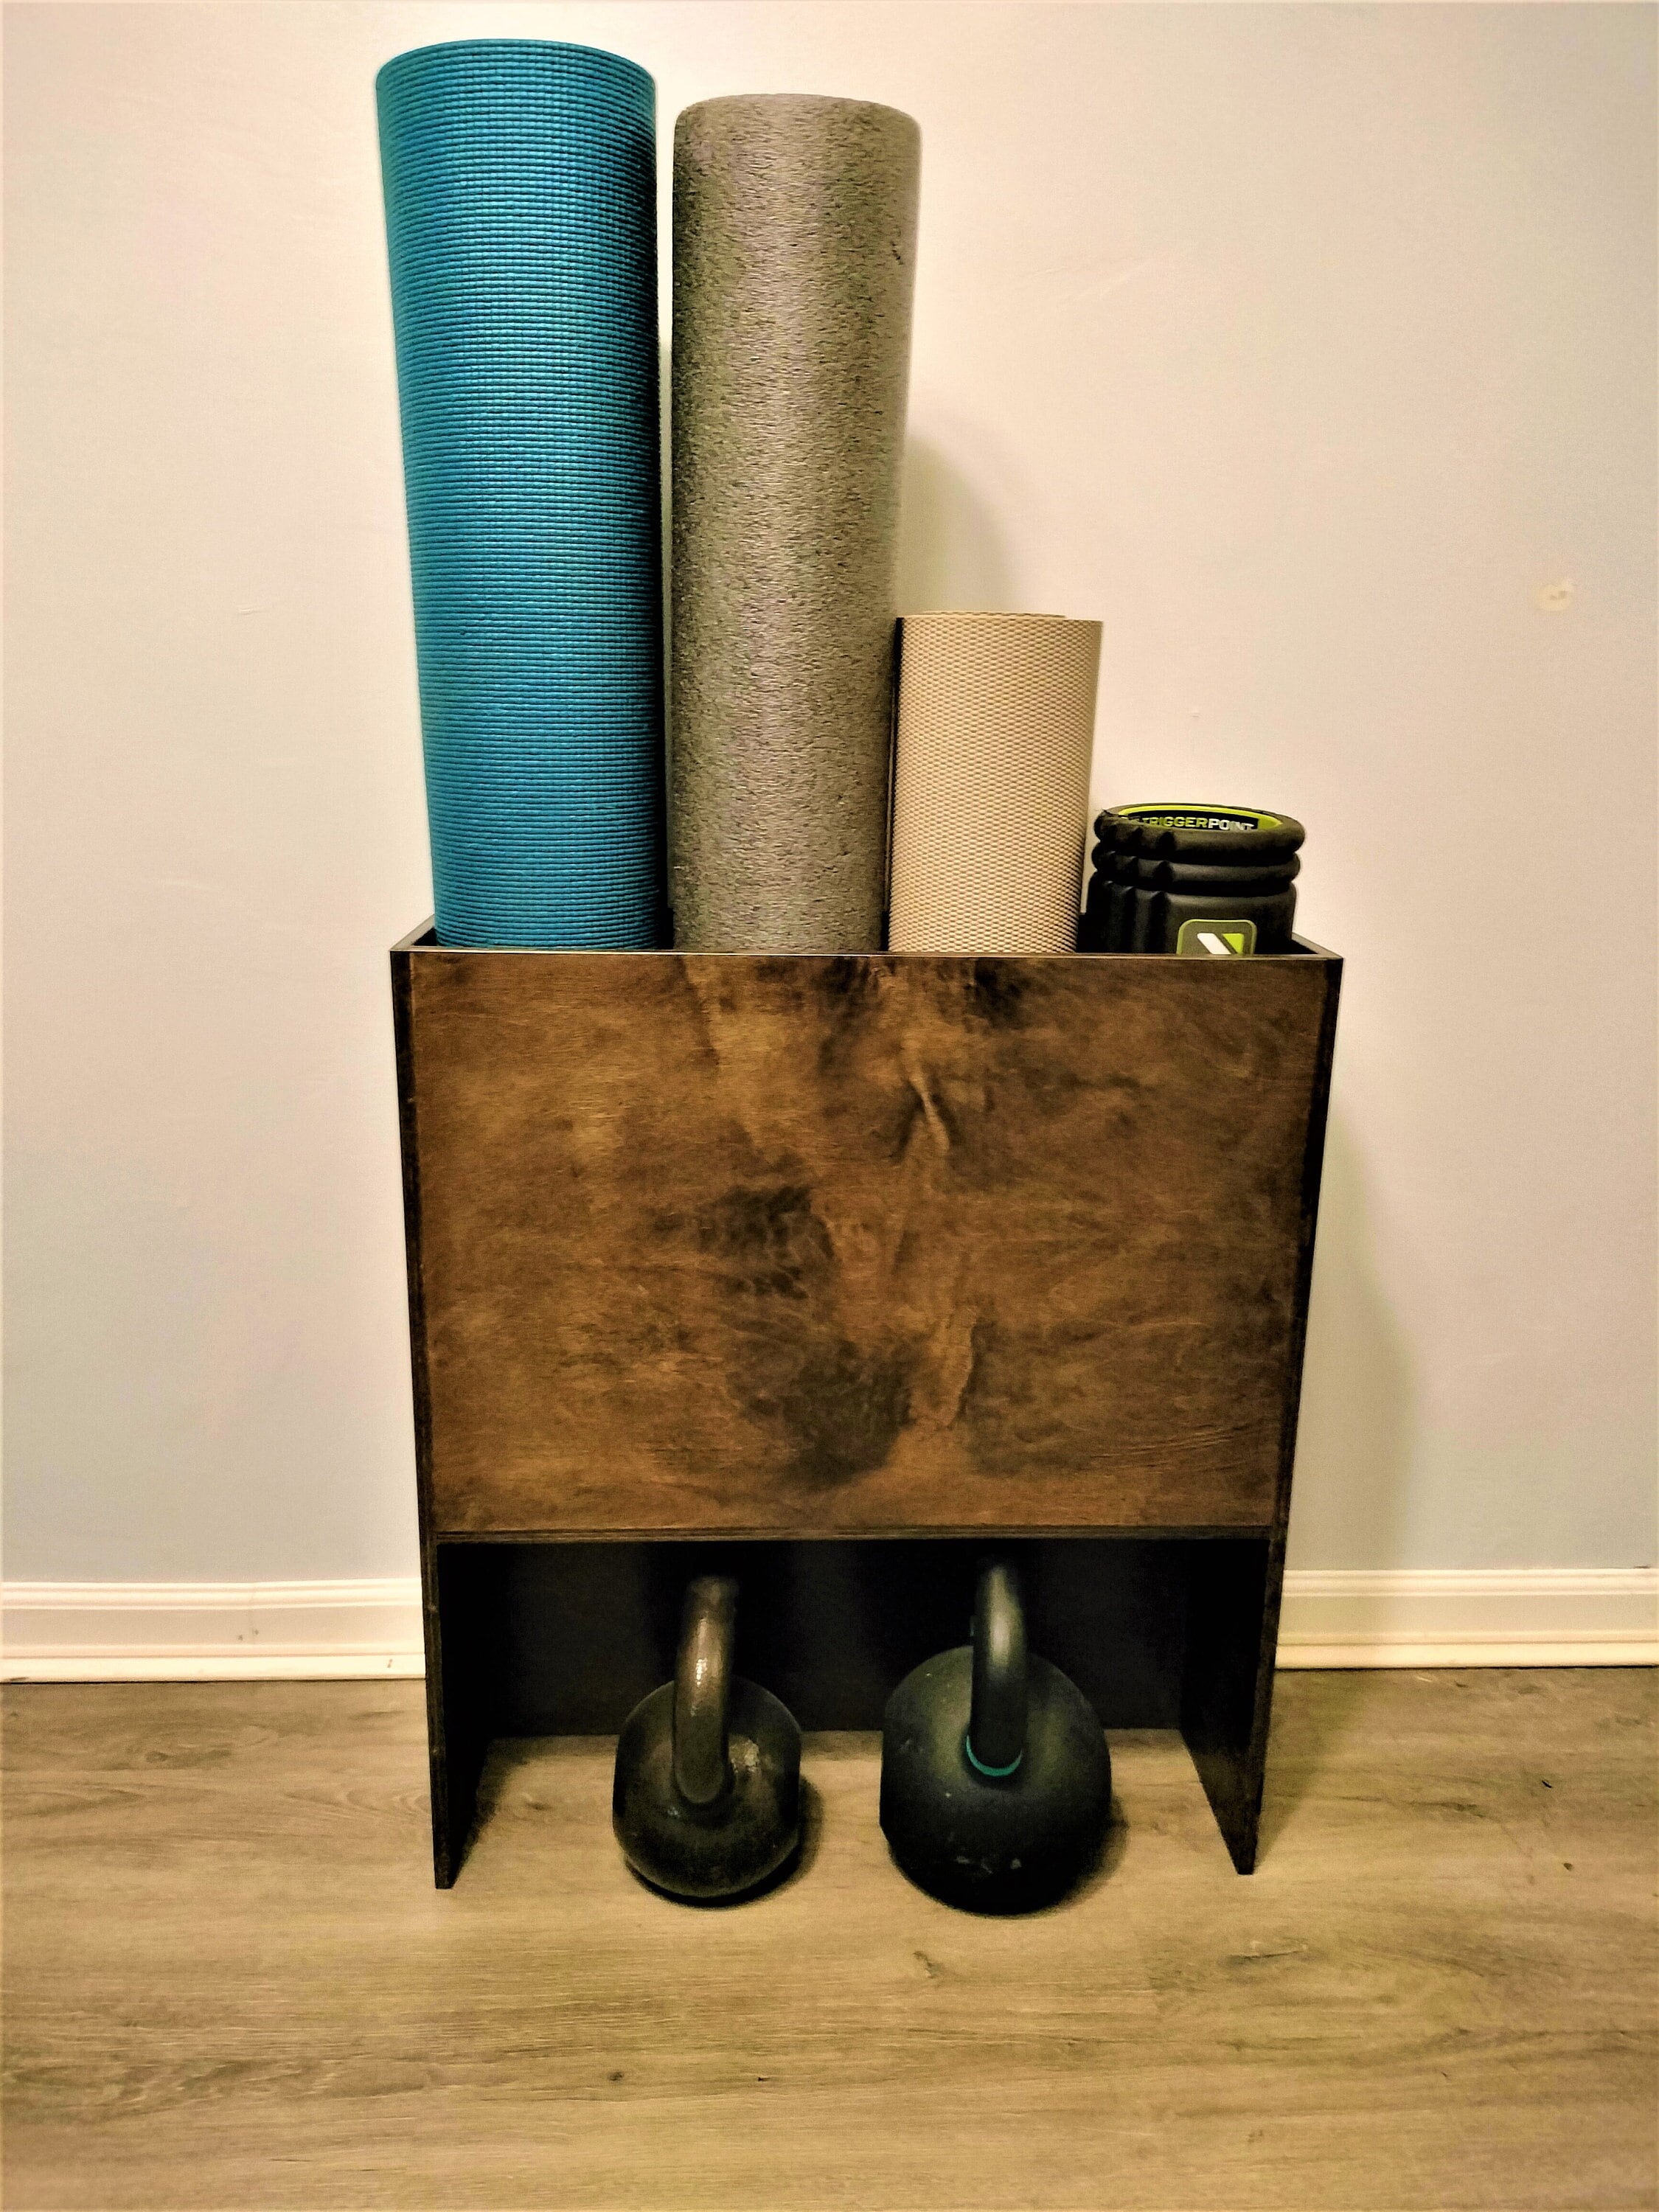 Yoga Mat Rack 2 Shelves With 2 Mat Racks, Yoga Decor, Gym Mat Rack, Gym  Storage, Fitness 